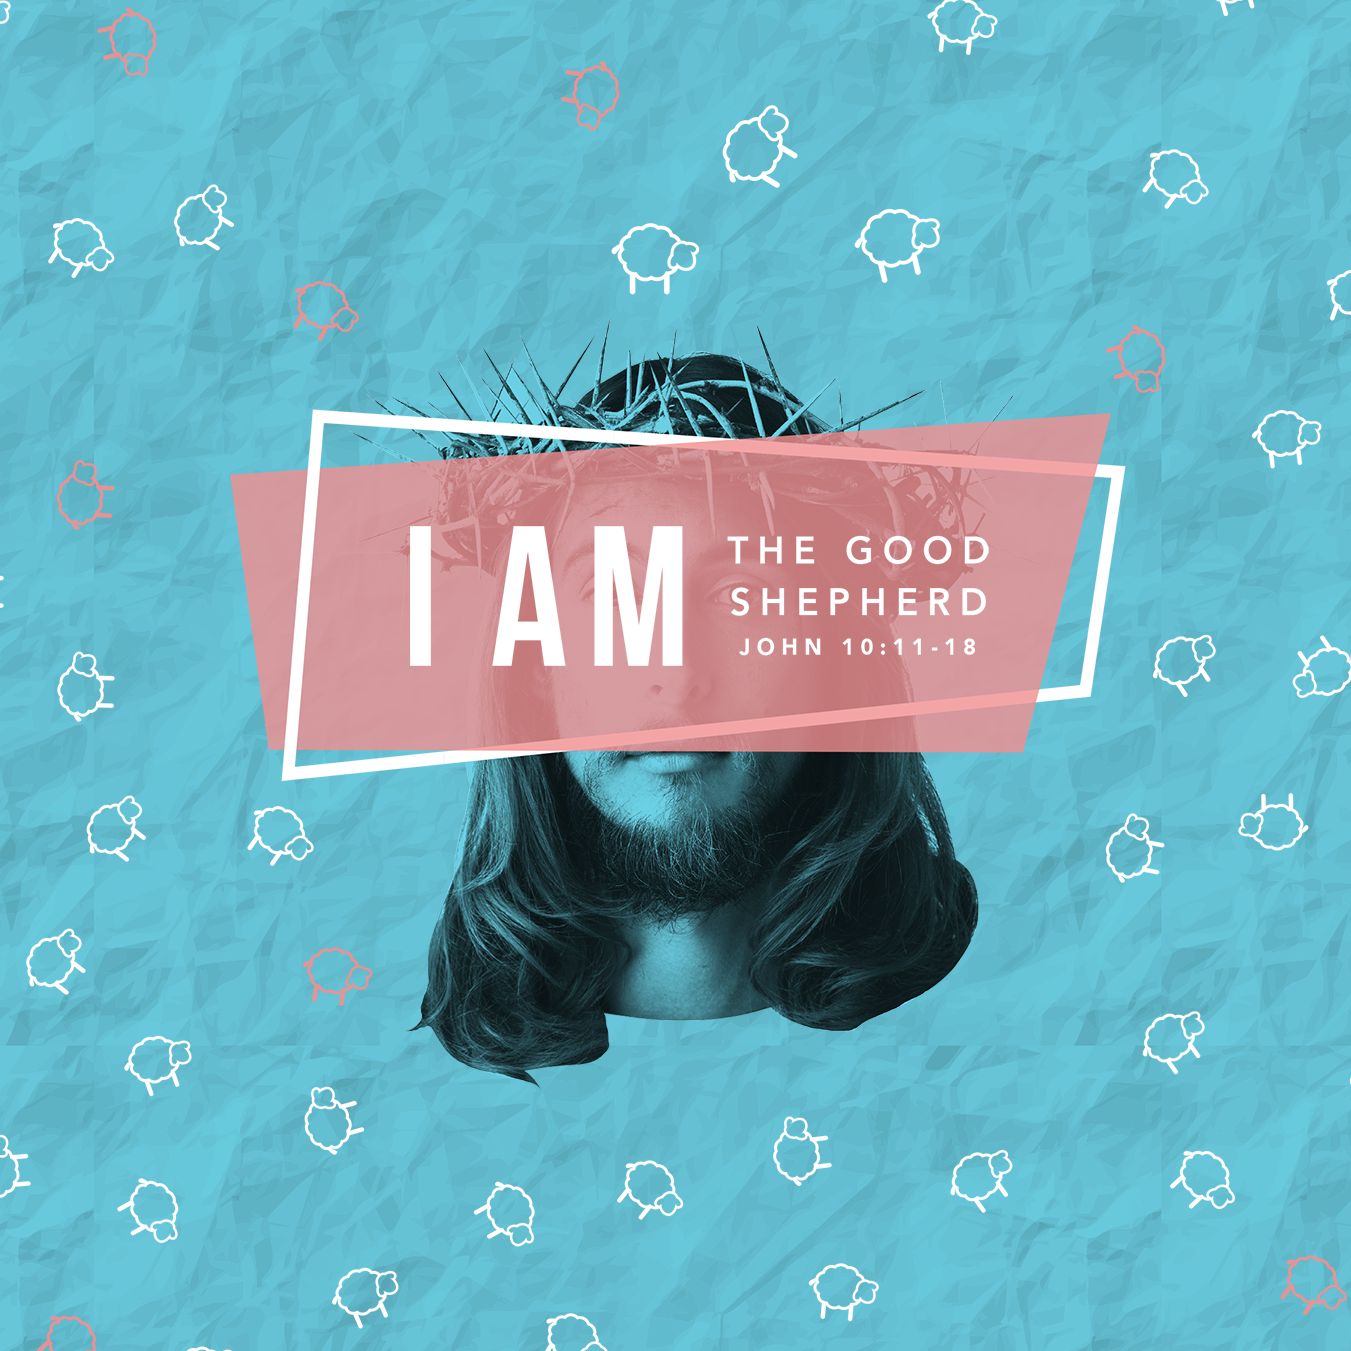 "I AM" | The Good Shepherd - 07/15/18 (Yorba Linda)